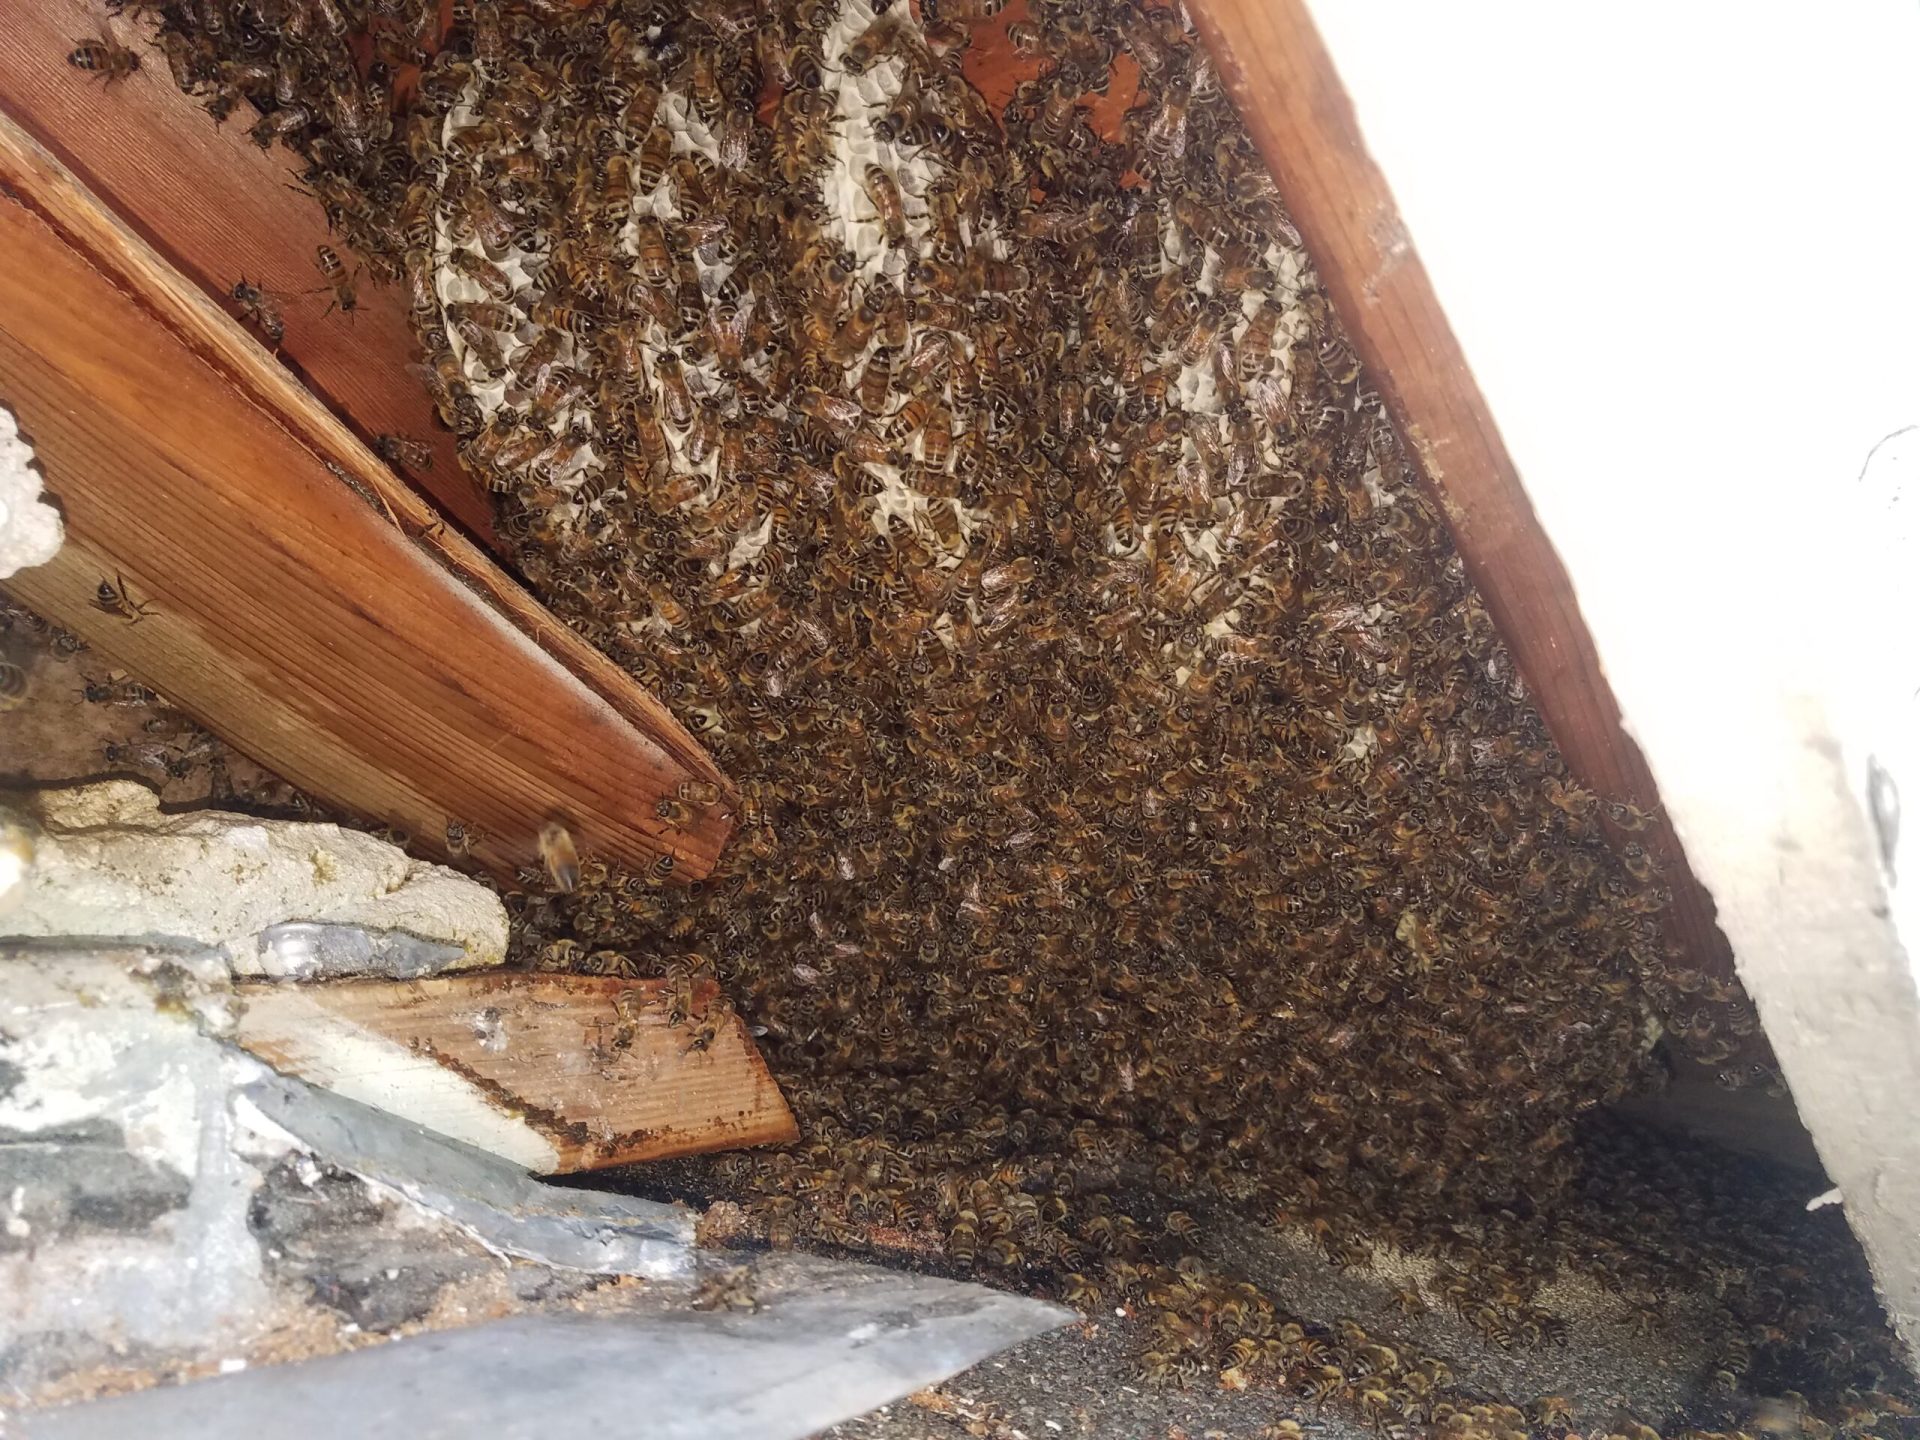 removing a wasp nest Sugar Land, TX 